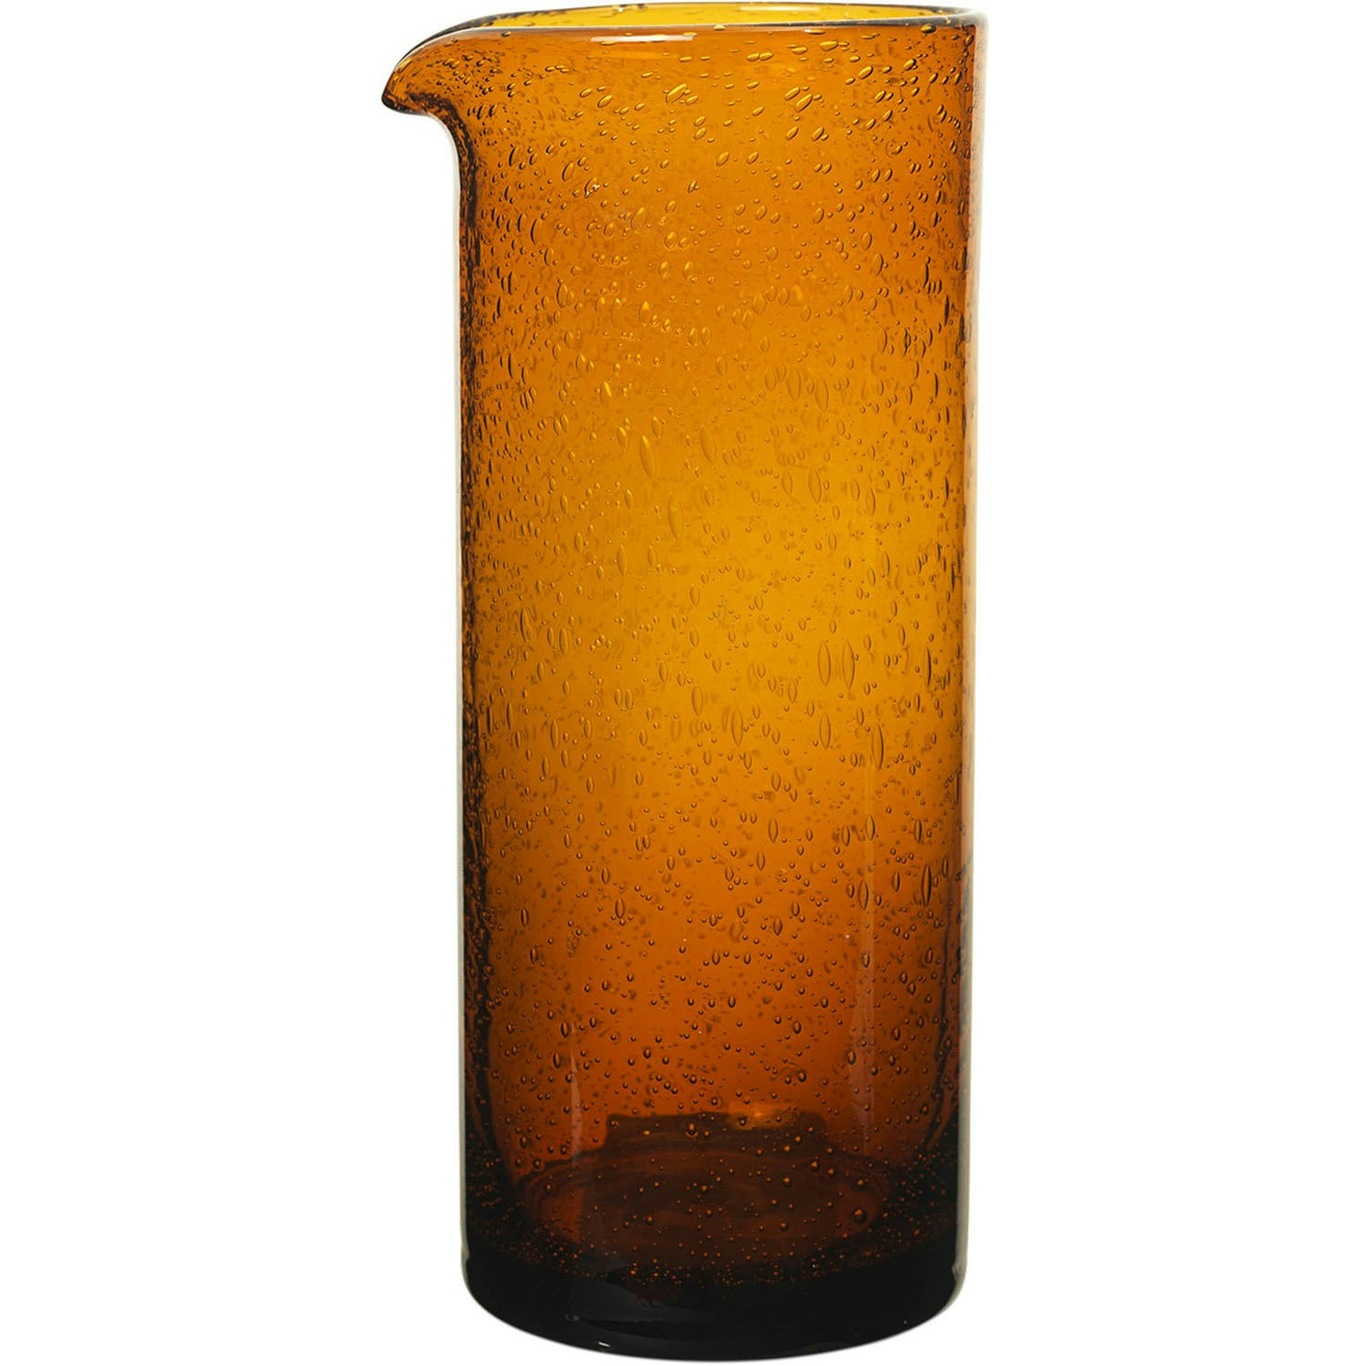 https://royaldesign.com/image/11/ferm-living-oli-jug-recycled-glass-1-l-7?w=800&quality=80